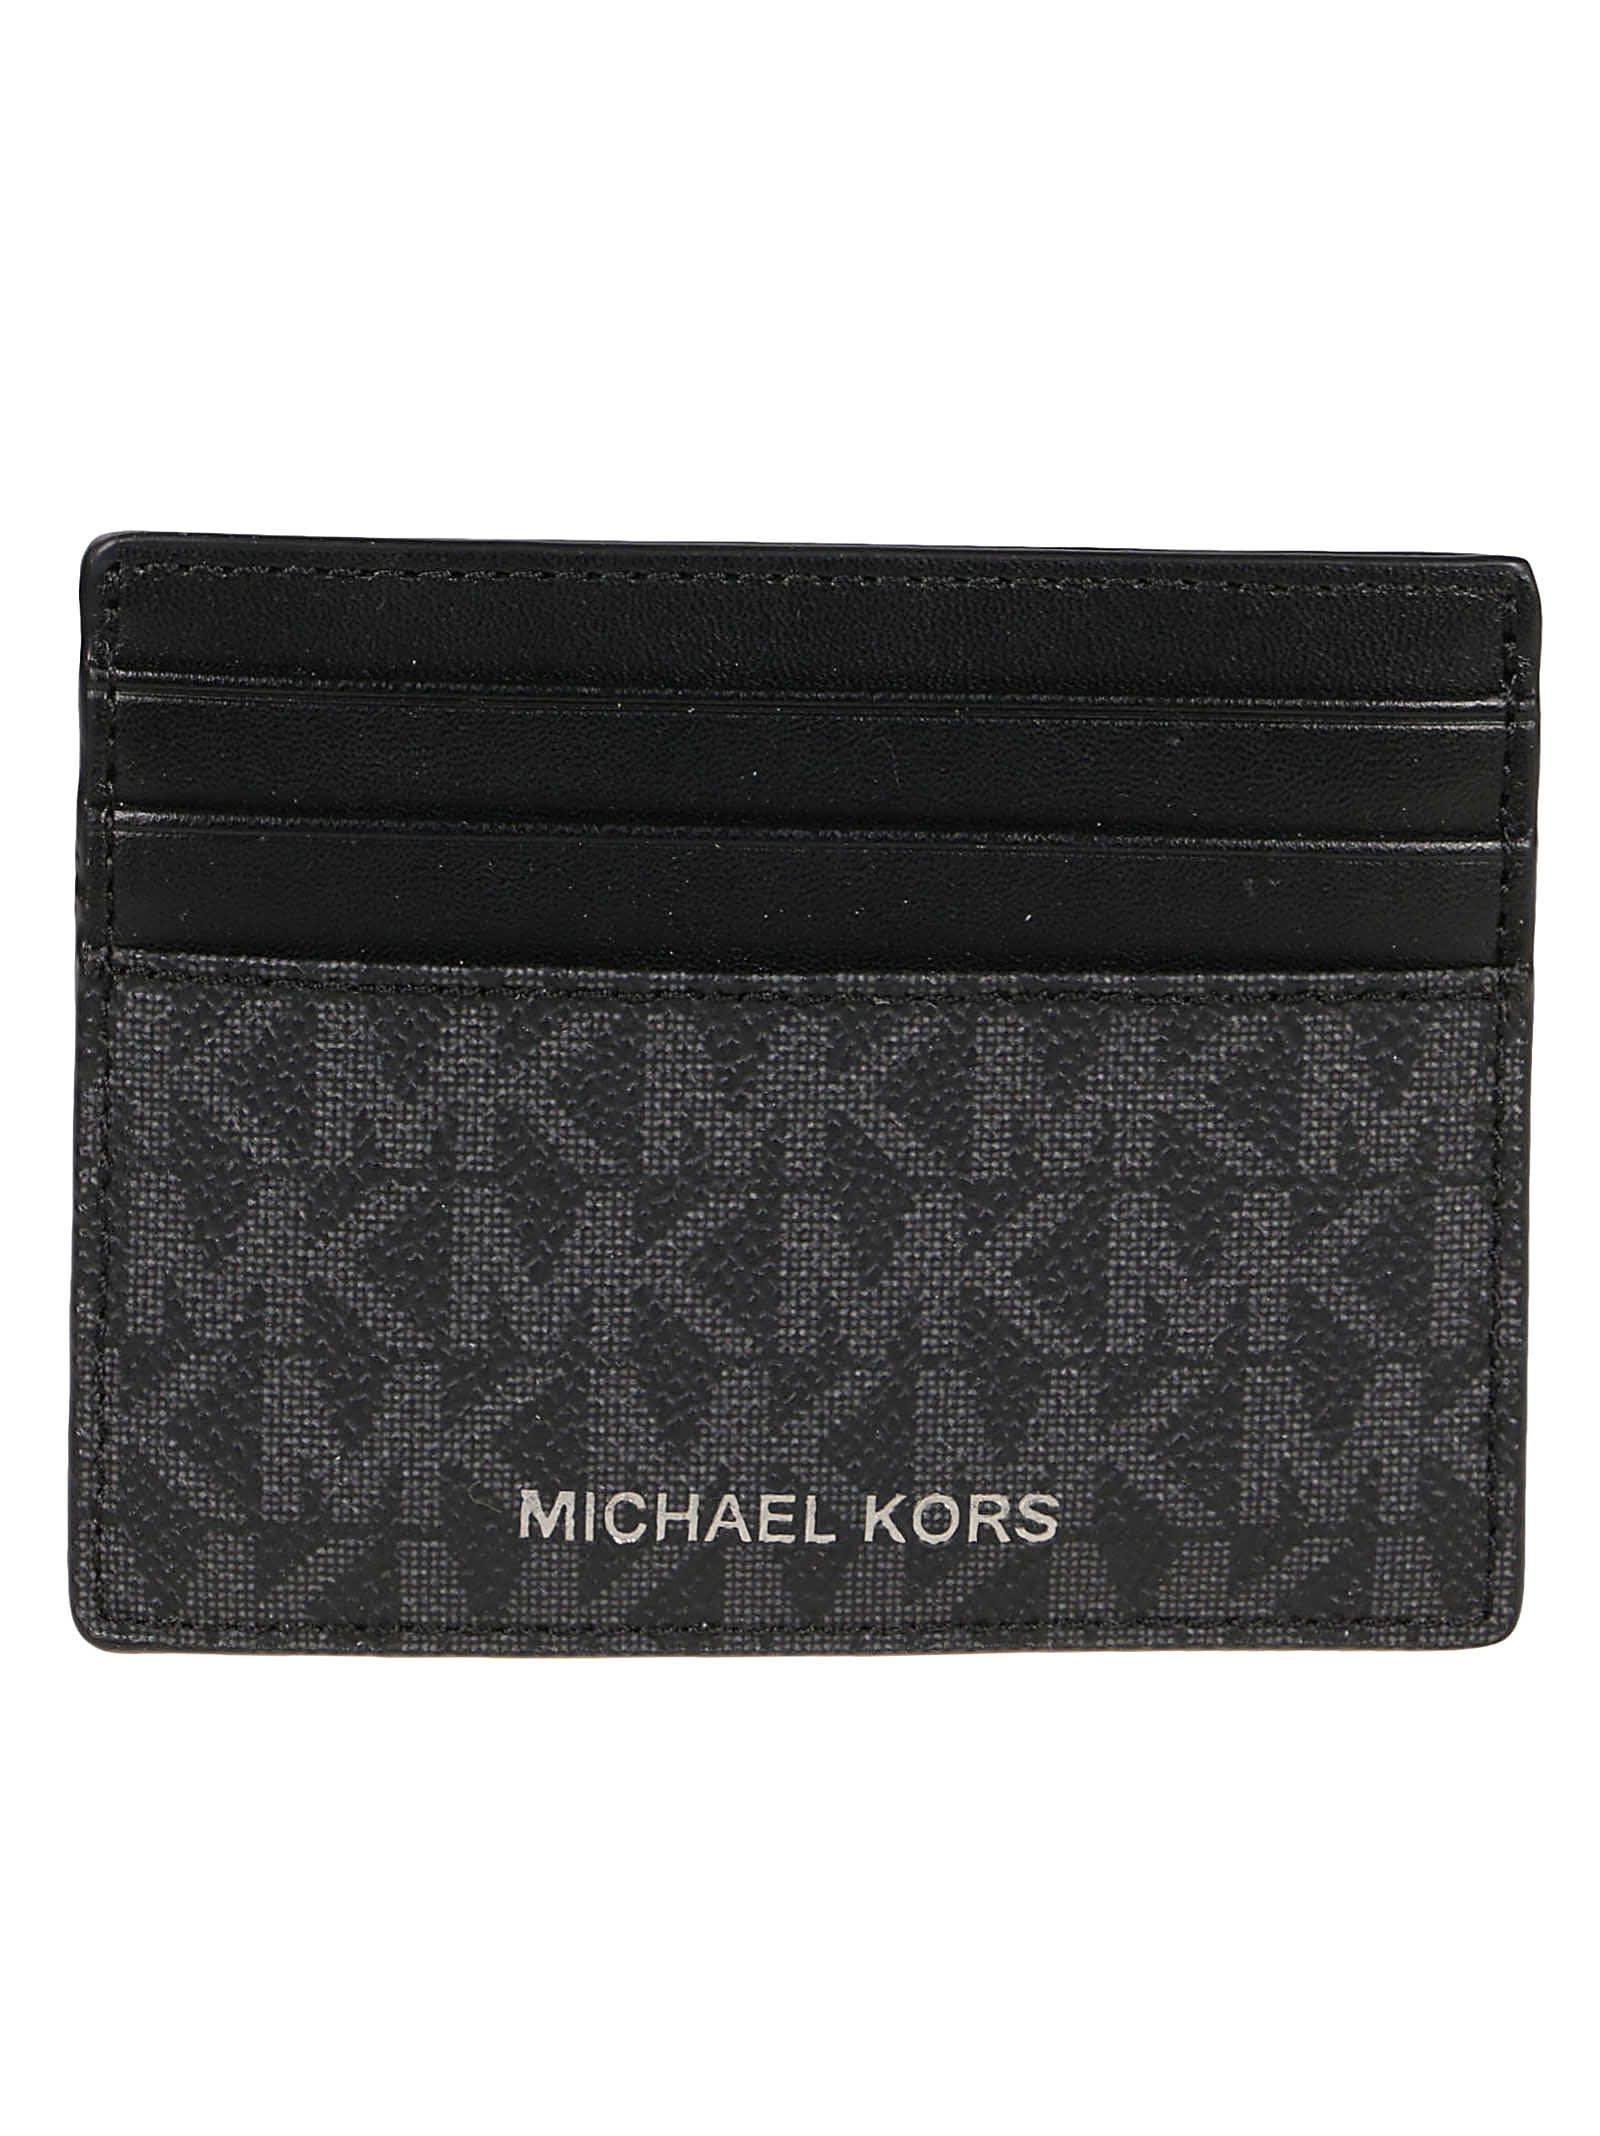 Michael Kors Greyson Credit Card Holder